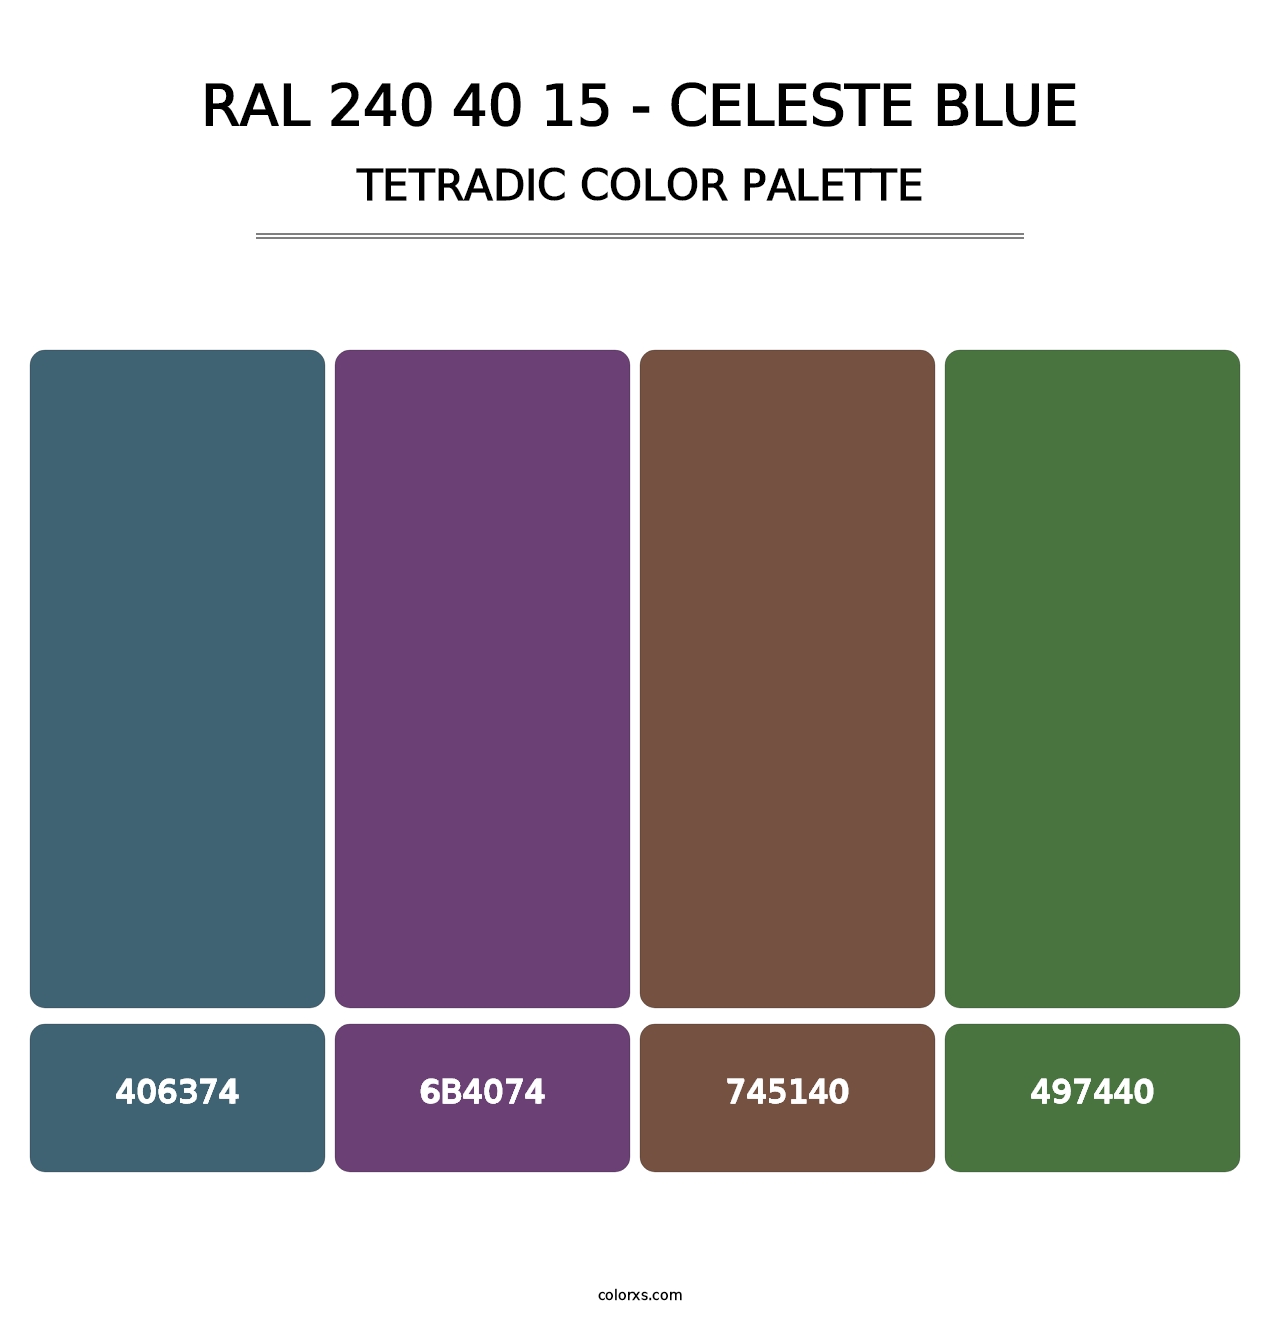 RAL 240 40 15 - Celeste Blue - Tetradic Color Palette